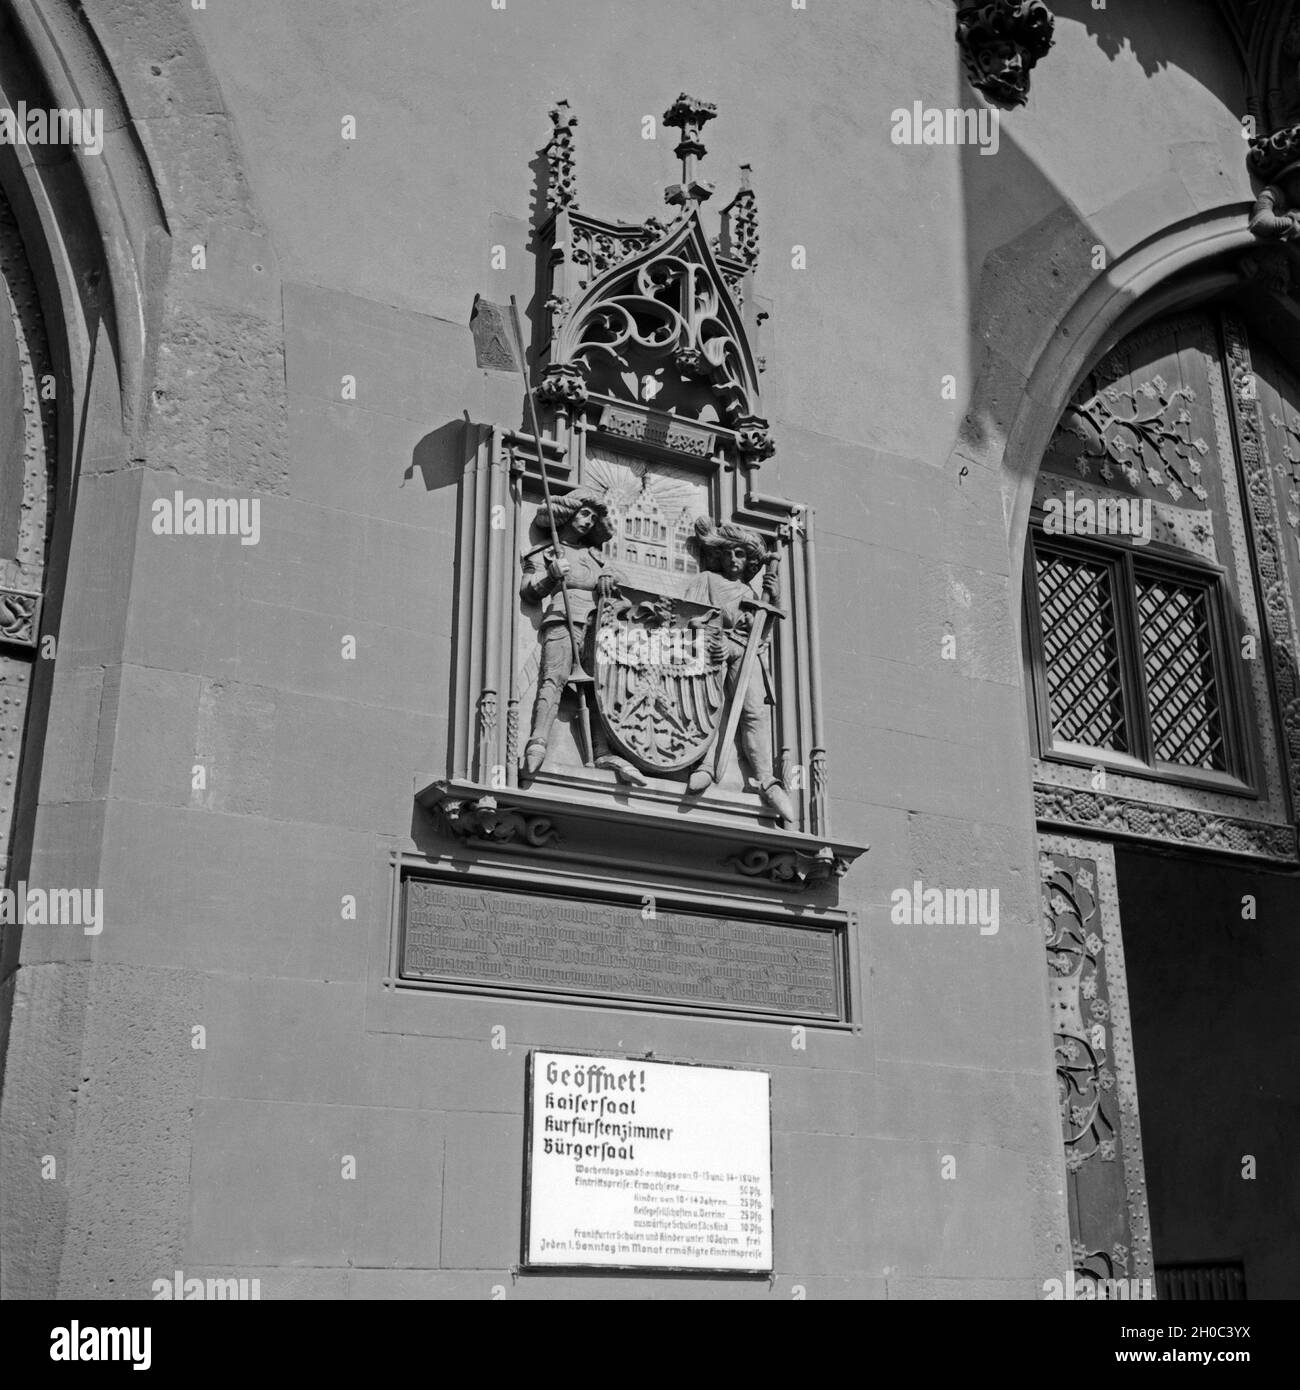 Stadtwappen und Eintrittpreise am Eingang zum Römer in Frankfurt am Main, Deutschland 1930er Jahre. coat of arms and admission prices at the entrance to the Roemer at Frankfurt, Germany 1930s. Stock Photo